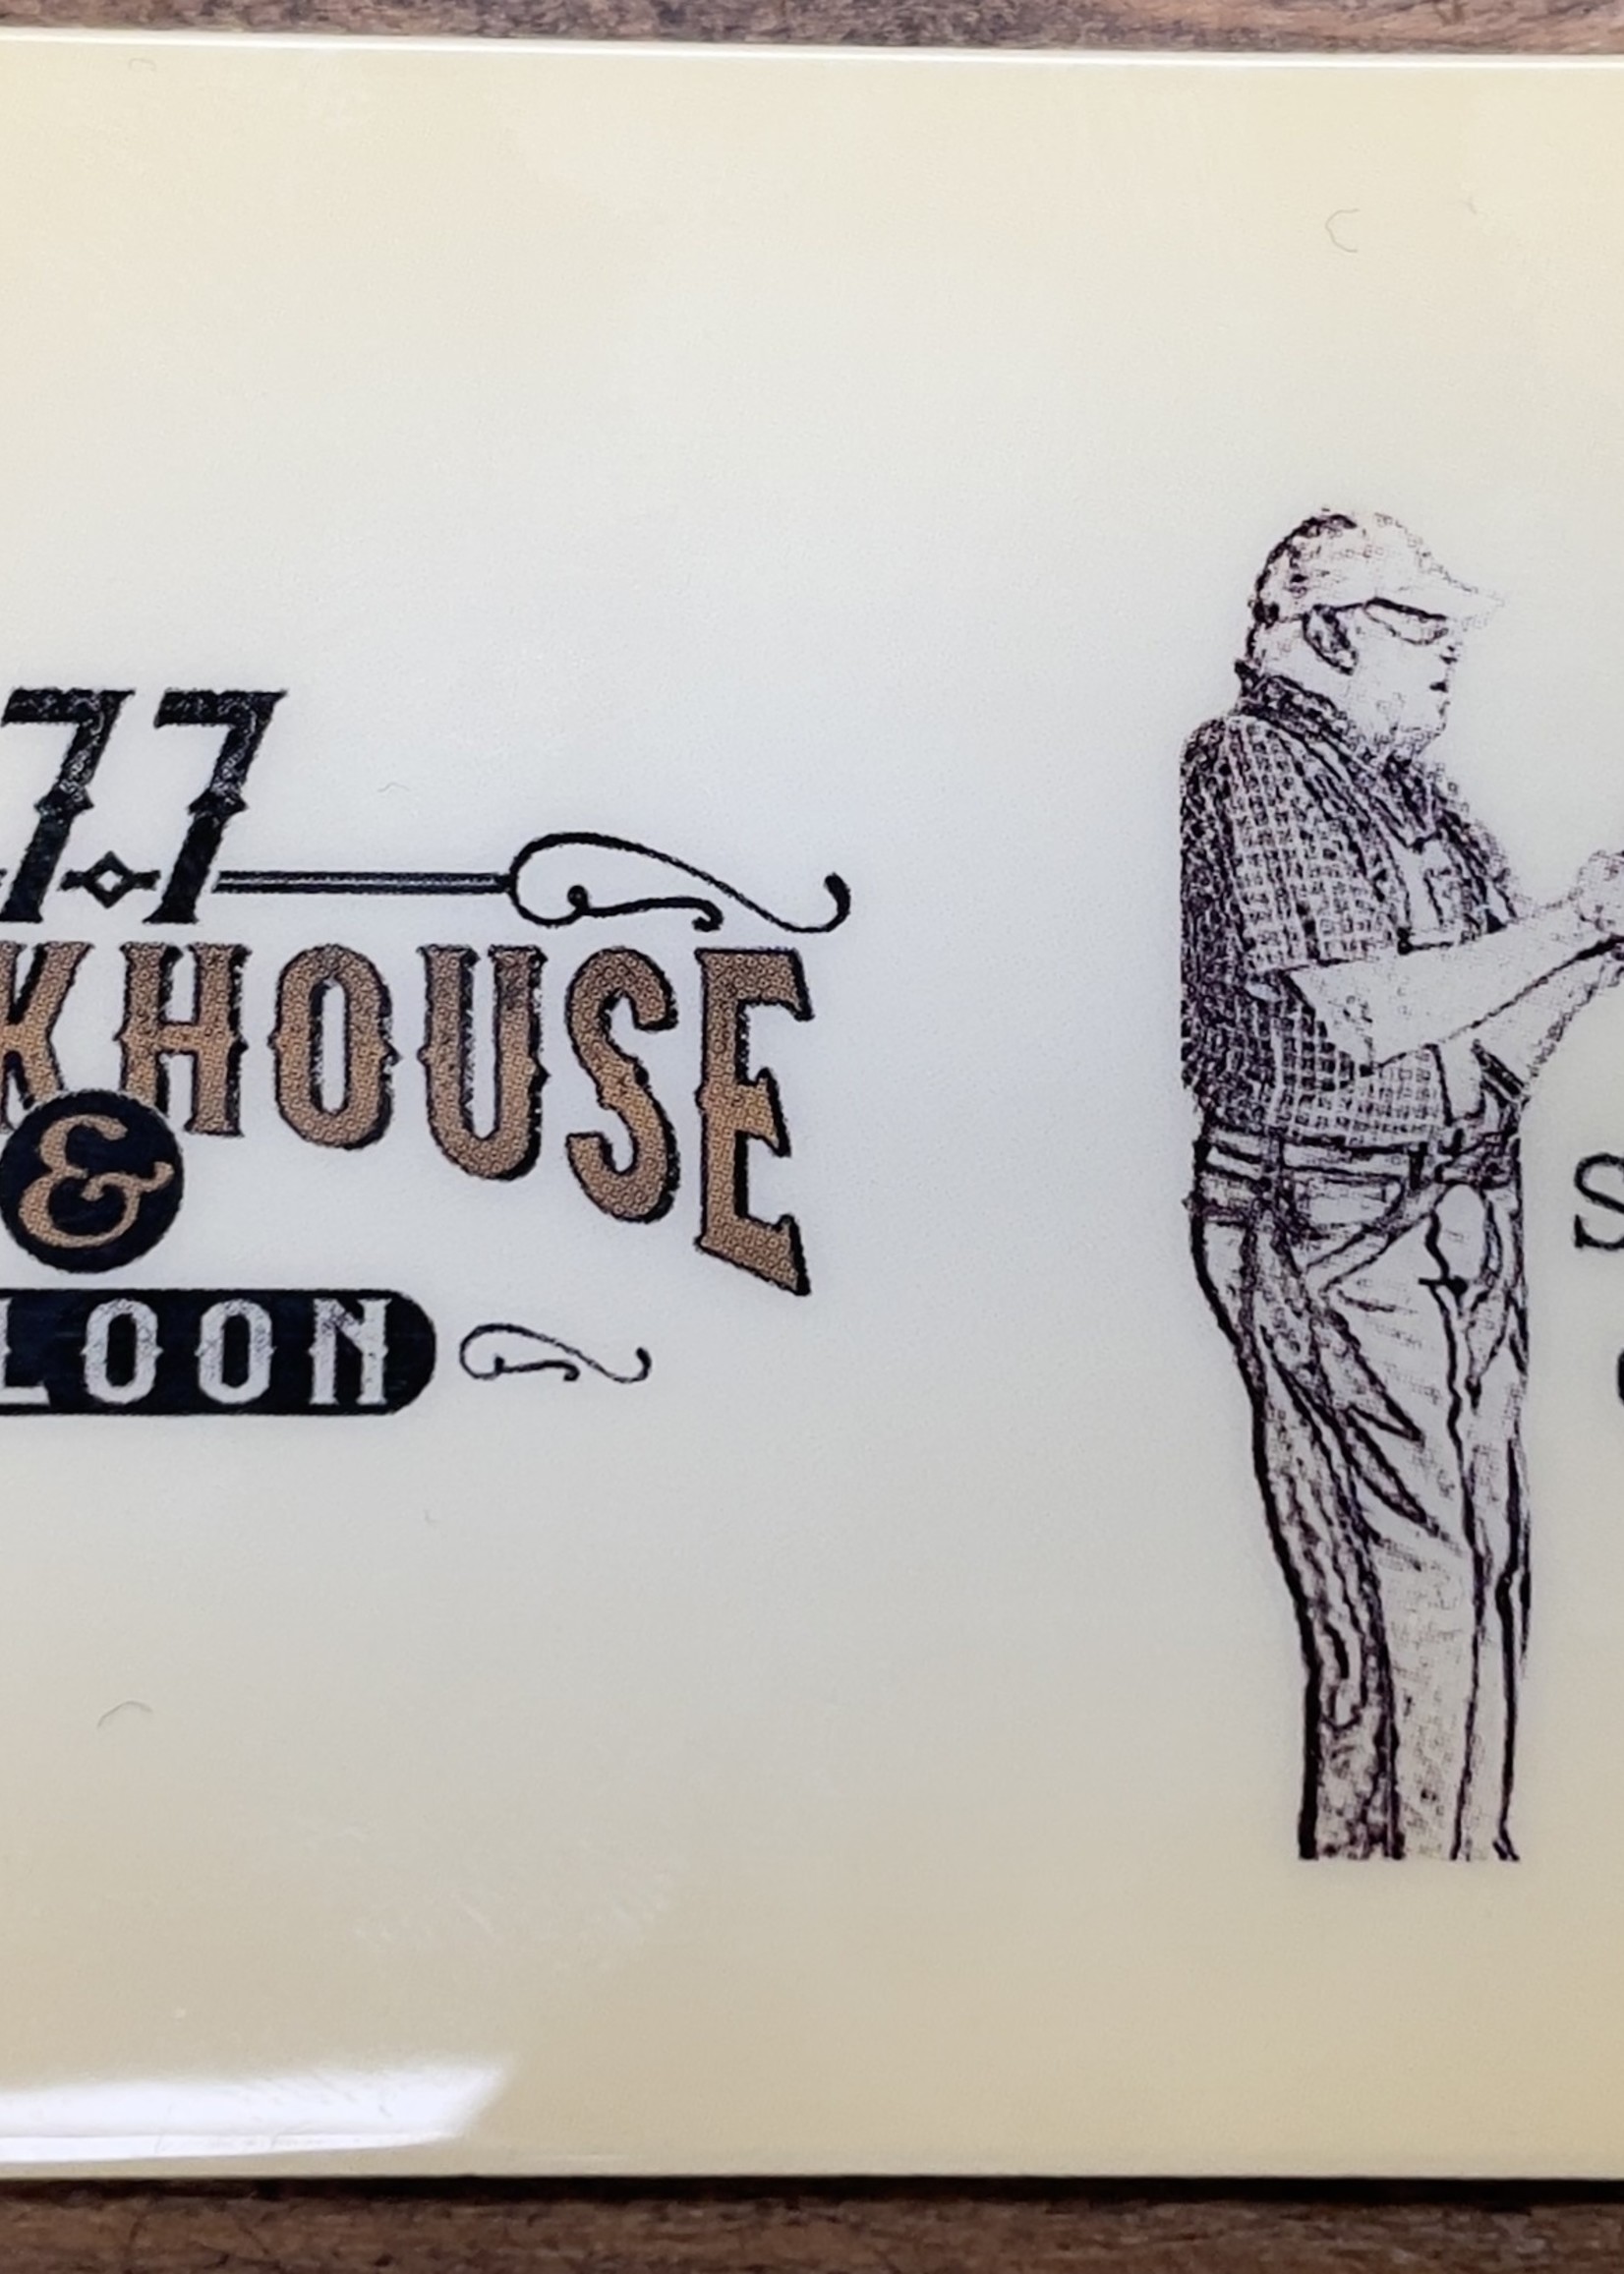 $25 Gift Card - 77 Steakhouse & Saloon / Shotgun Coffee